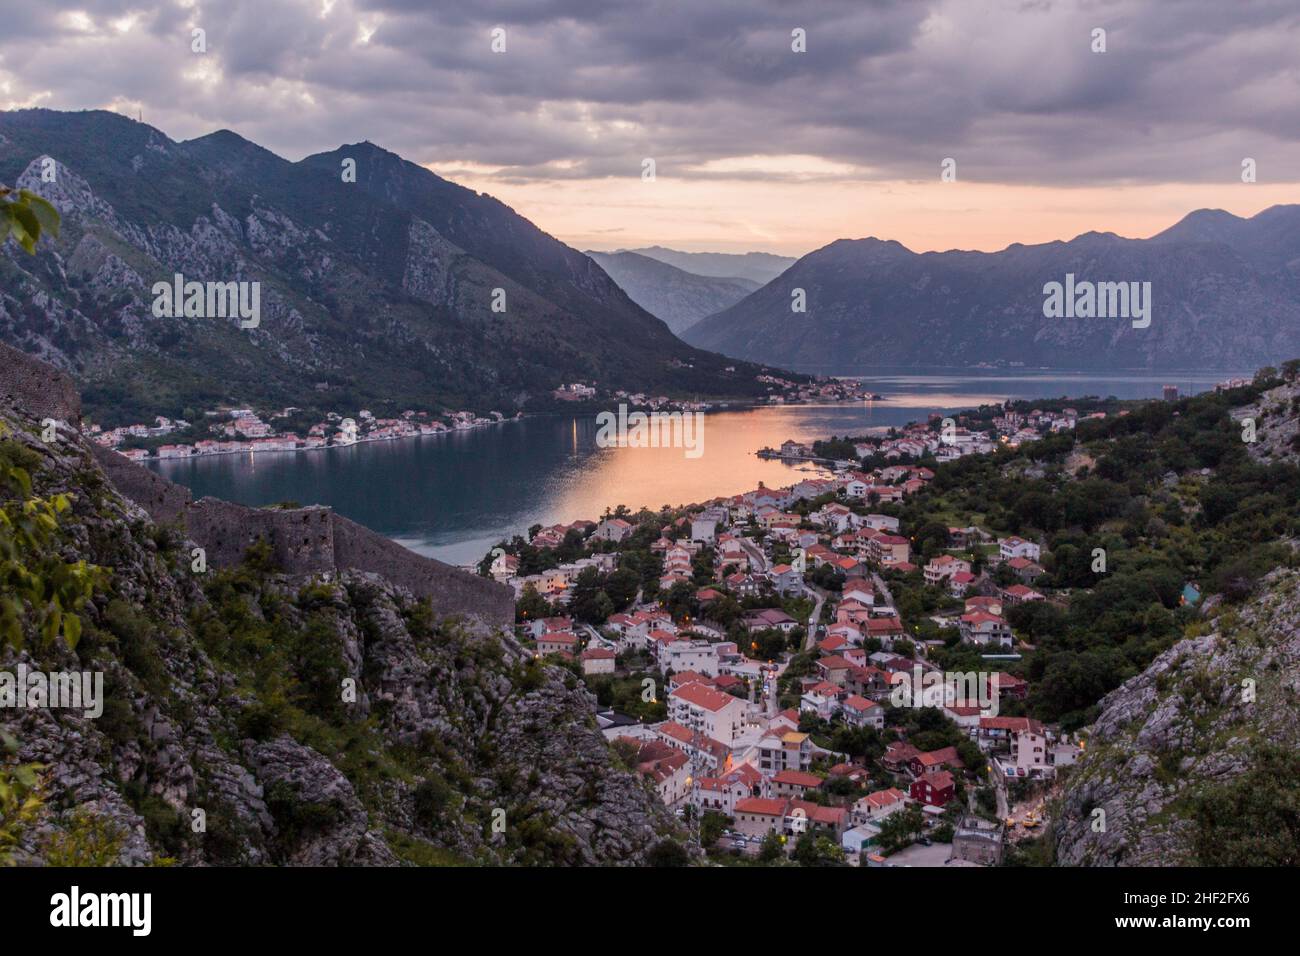 Sunset aerial view of Tabacina neighborhood of Kotor and the Bay of Kotor, Montenegro. Stock Photo